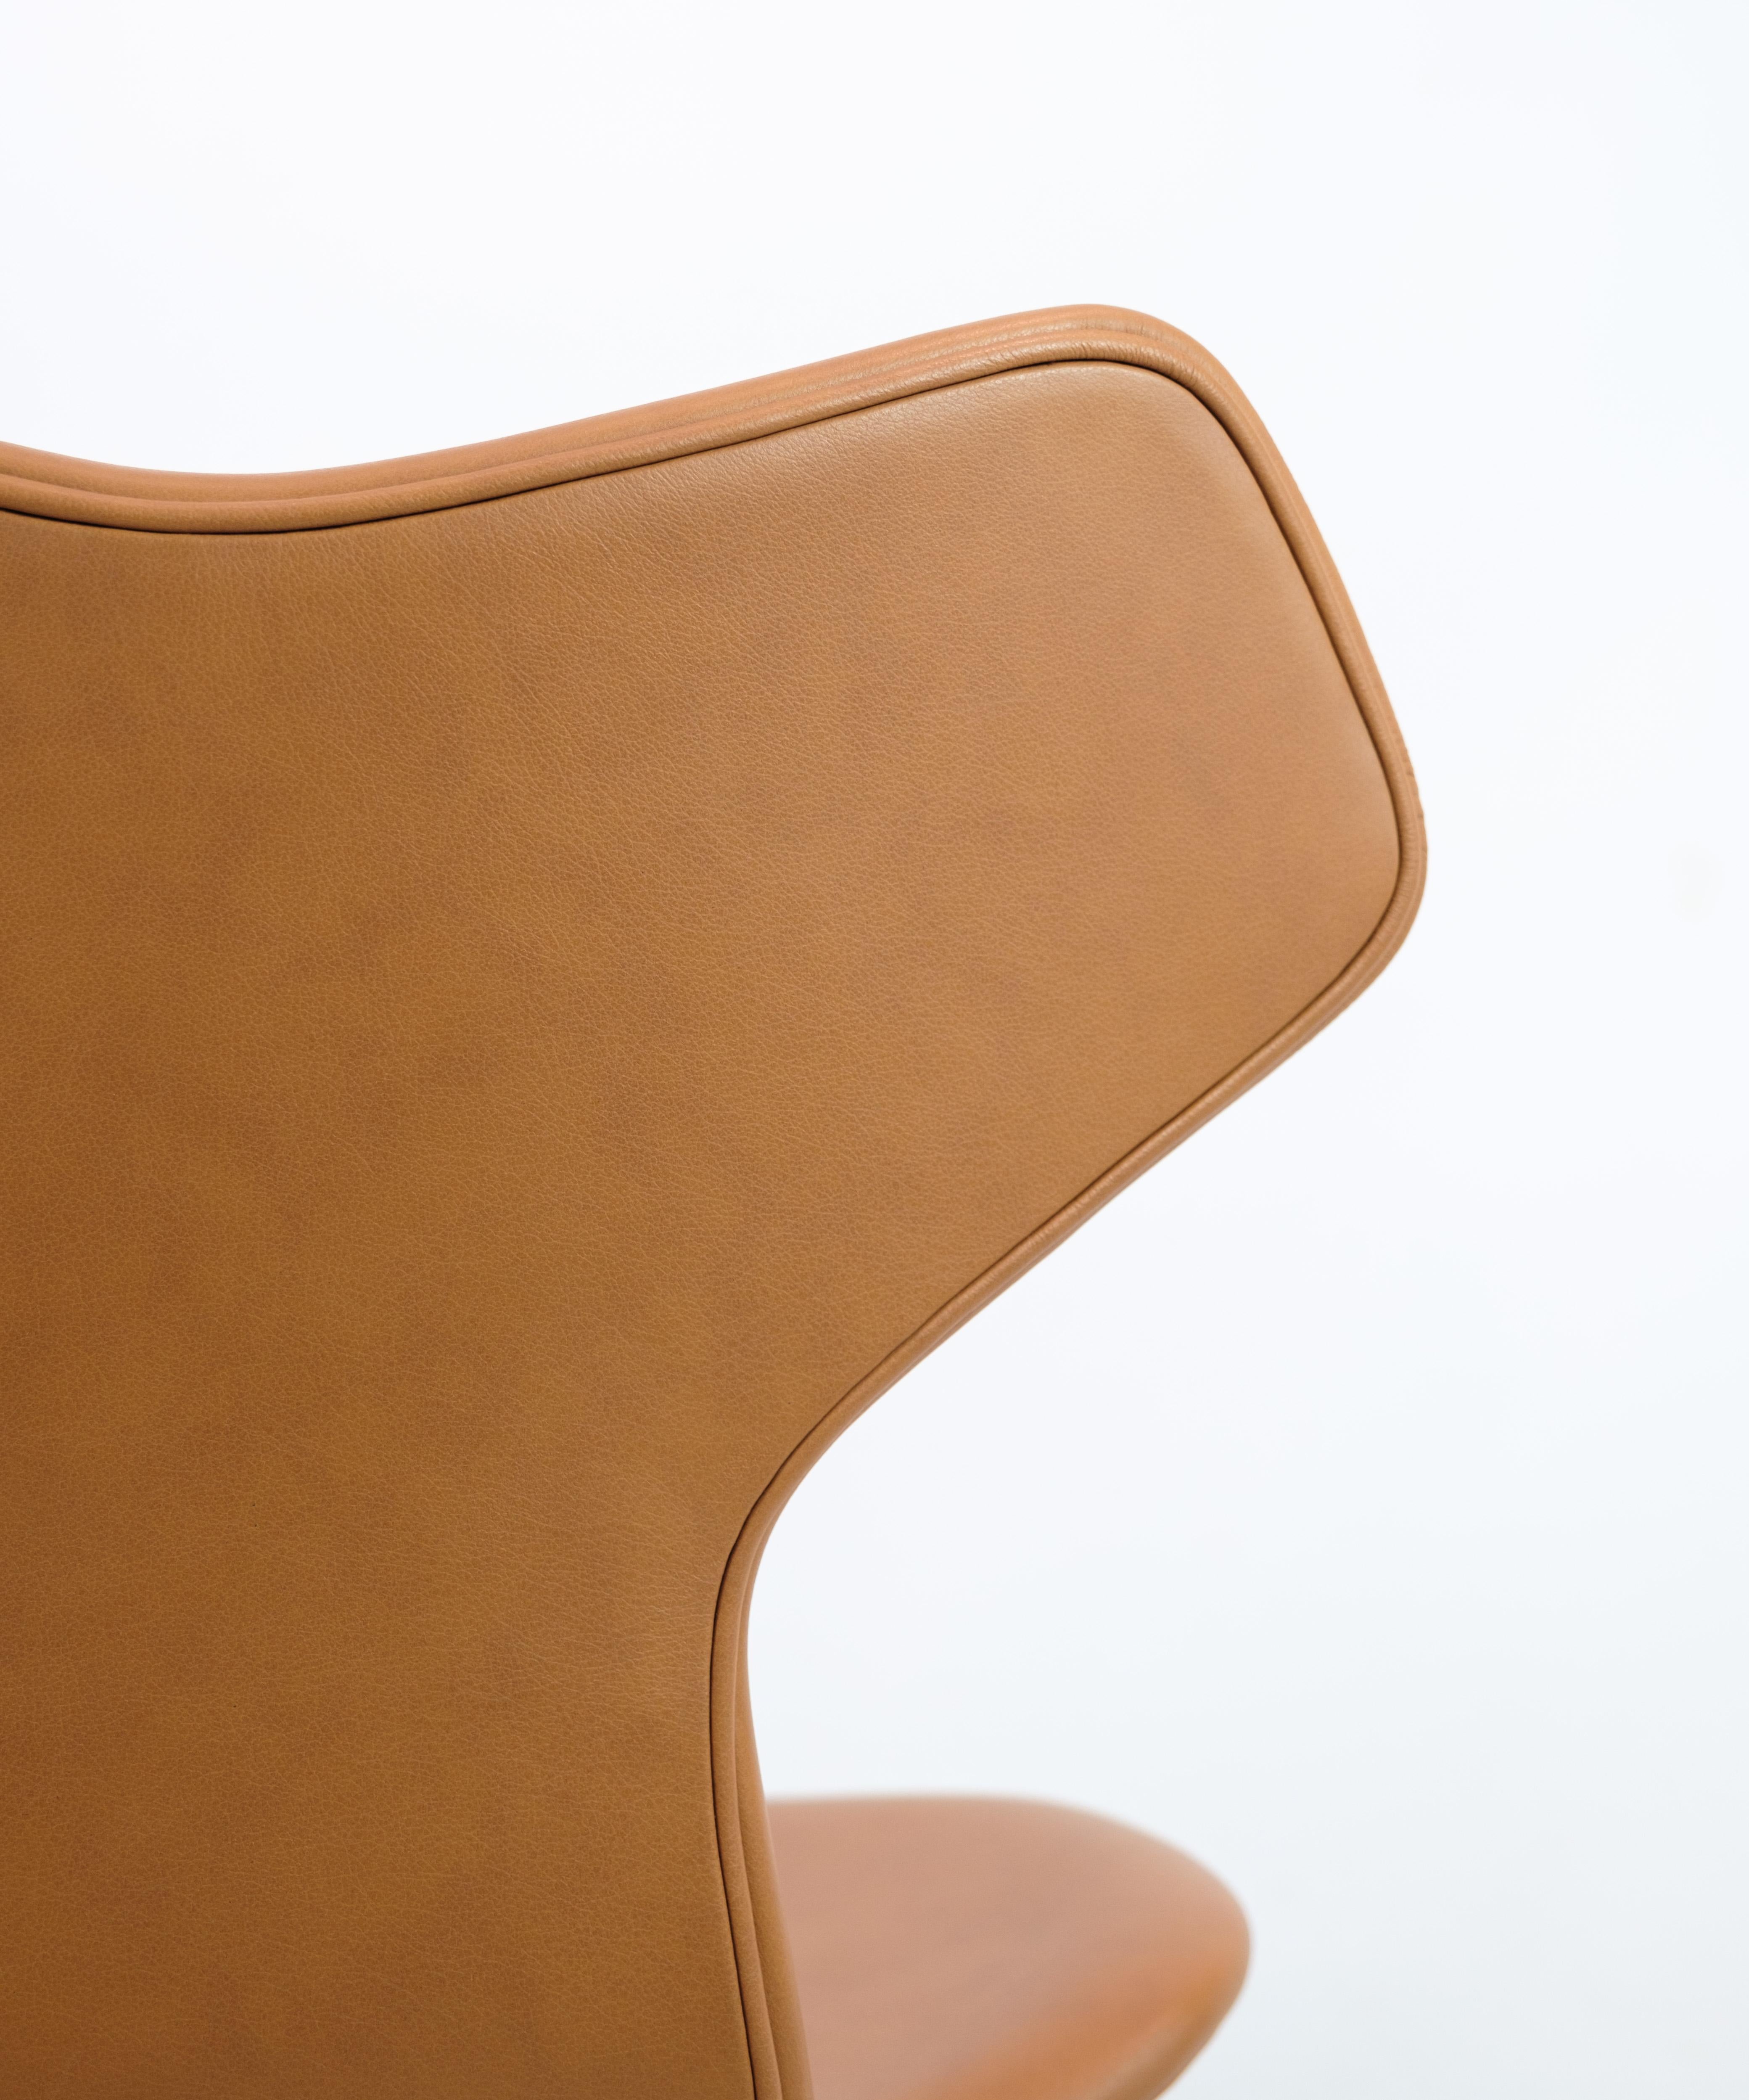 Leather Grand Prix chair, Model 3130, Arne Jacobsen, 1957